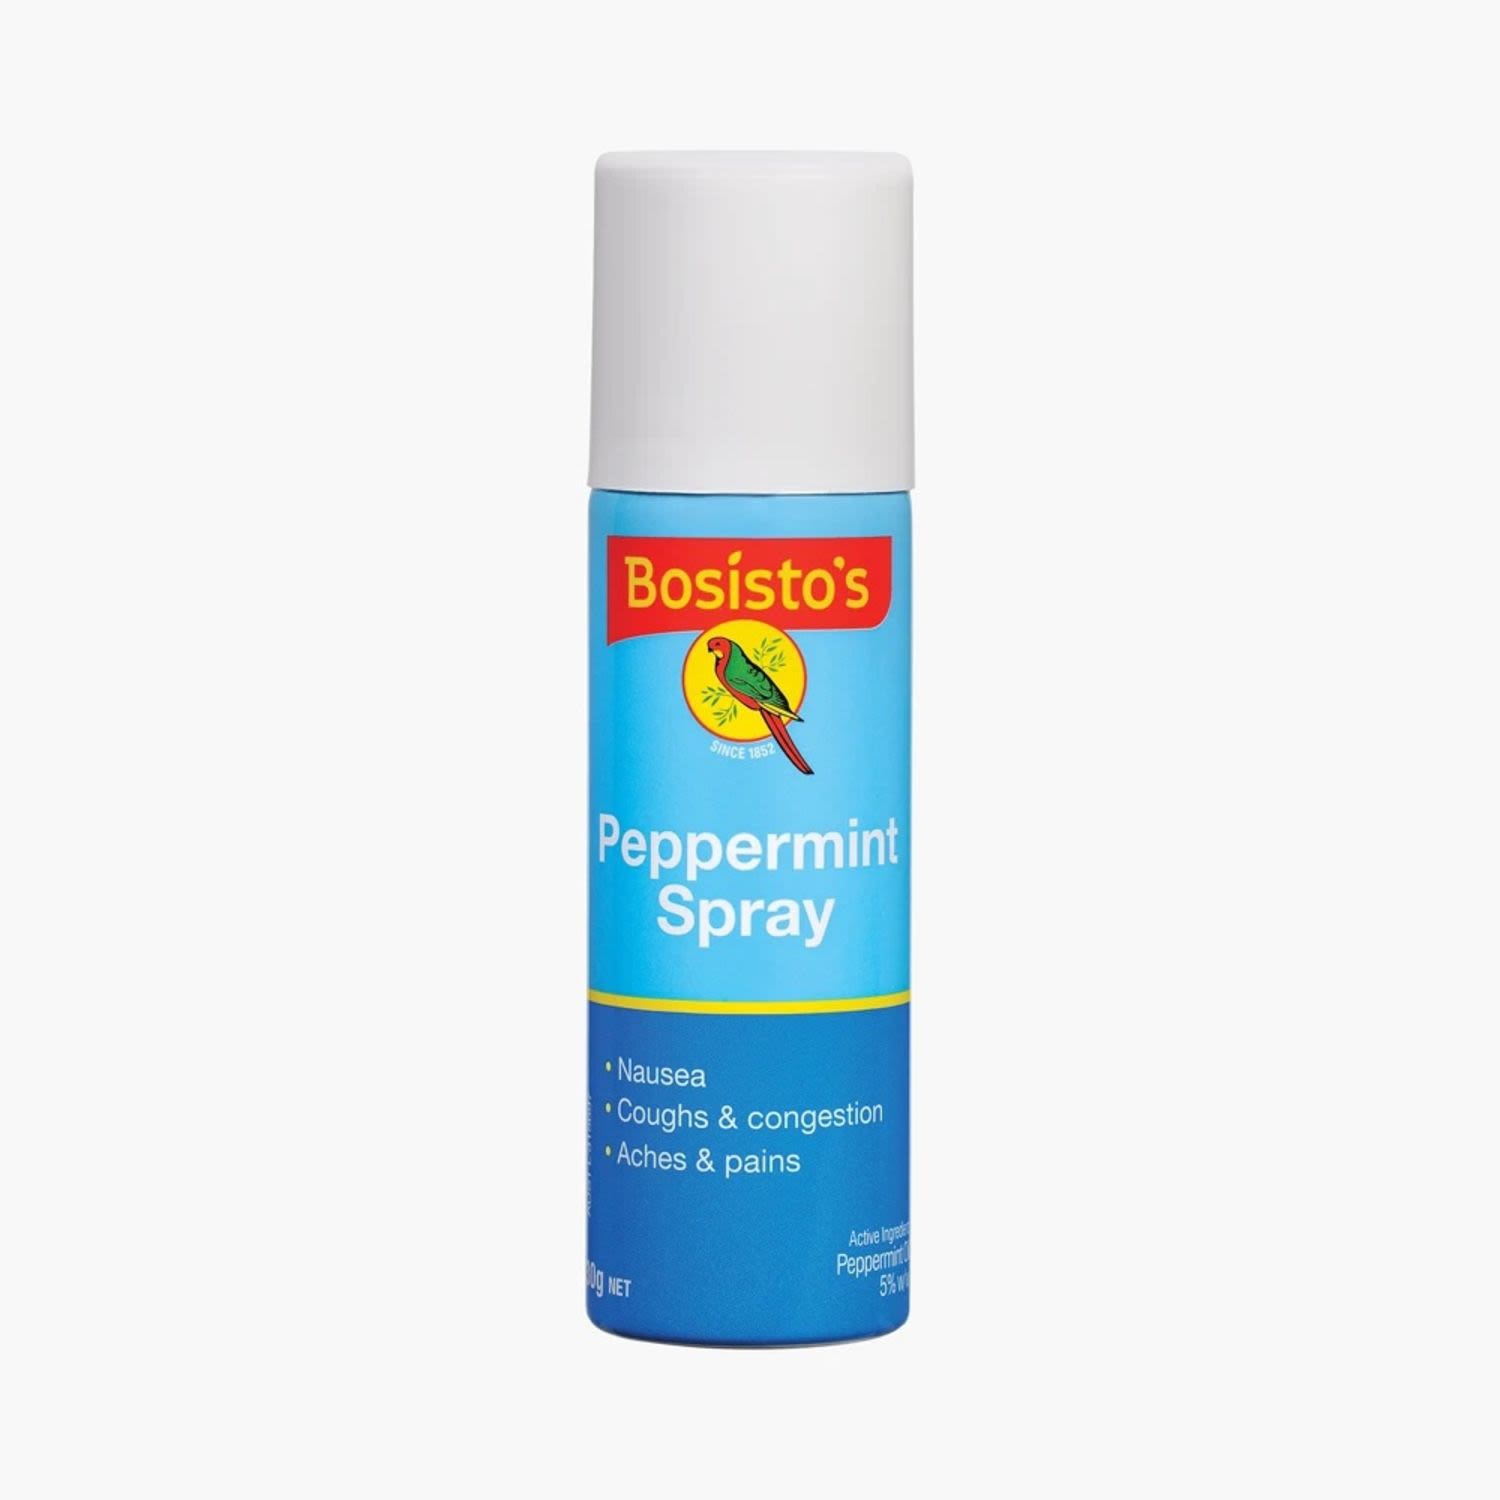 Bosistos Peppermint Spray, 30 Gram